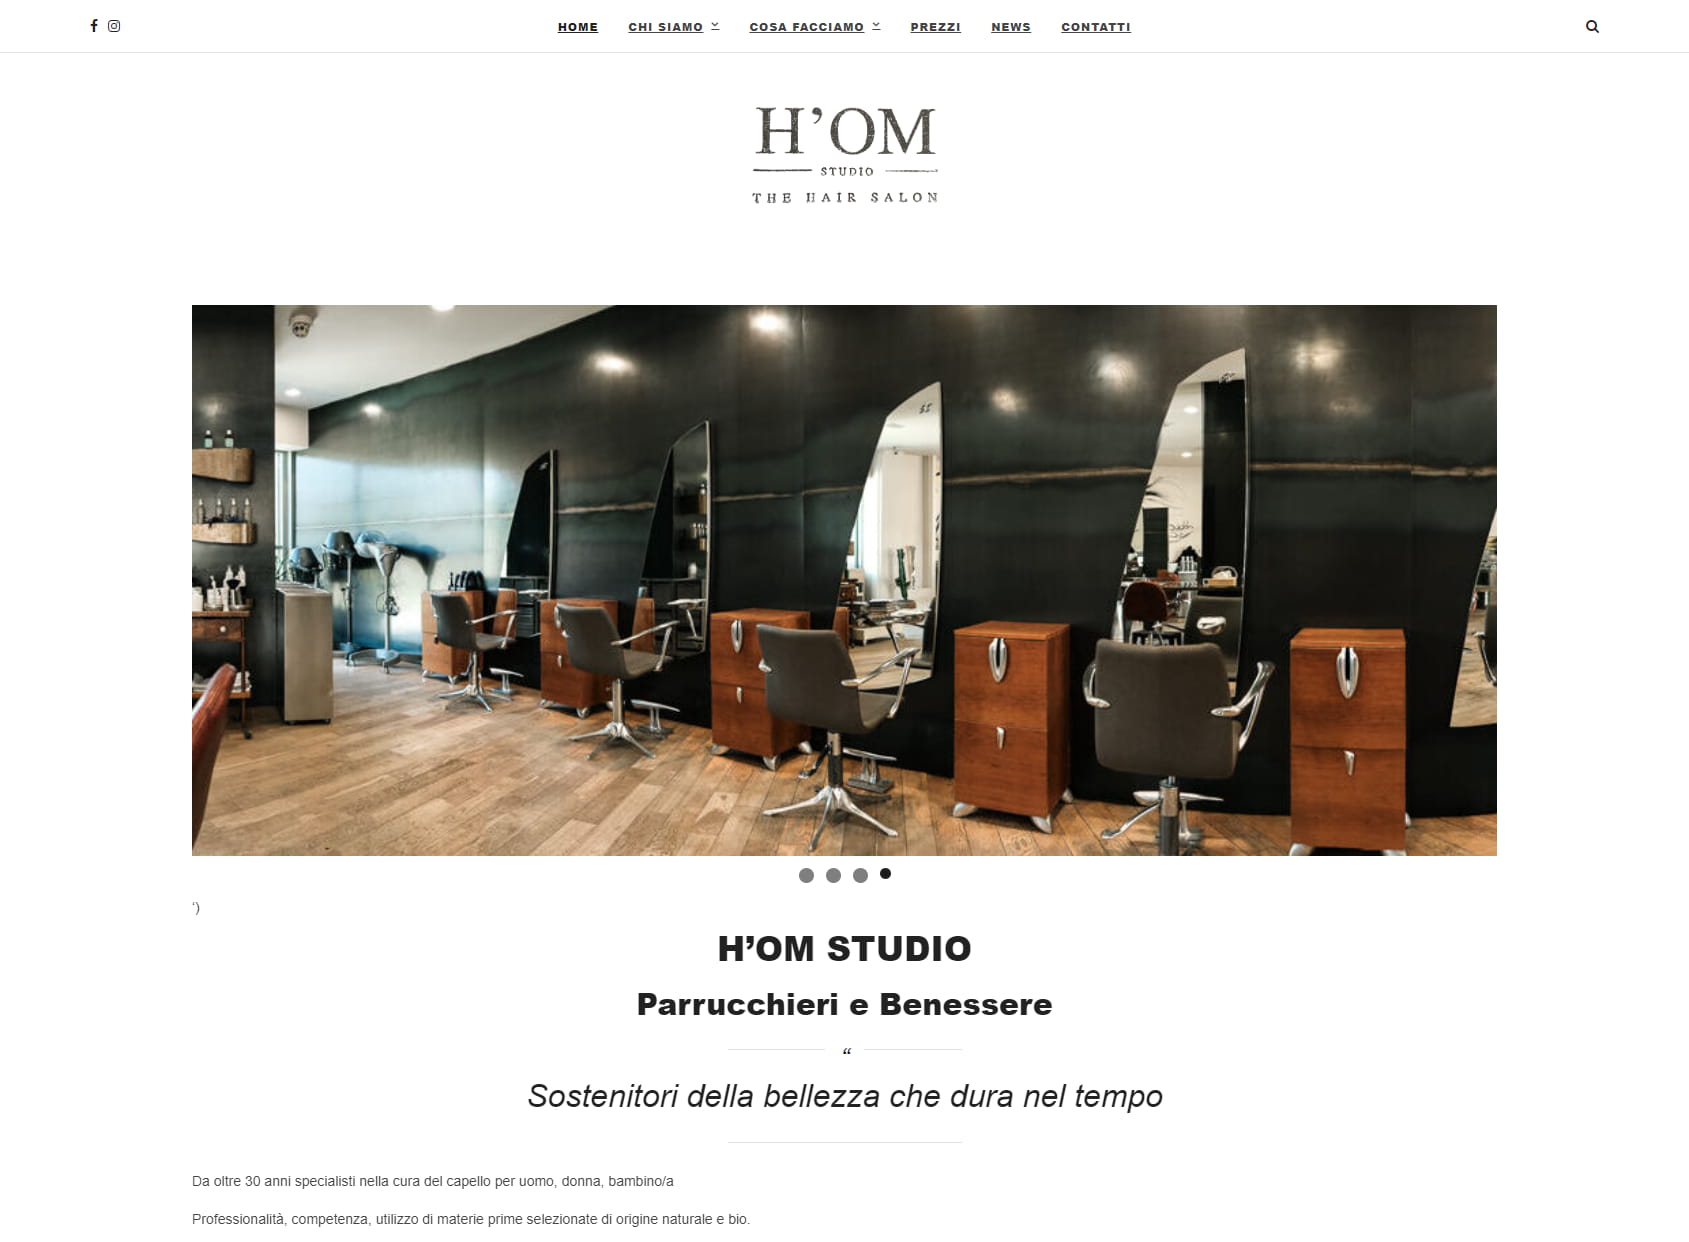 Hom Studio